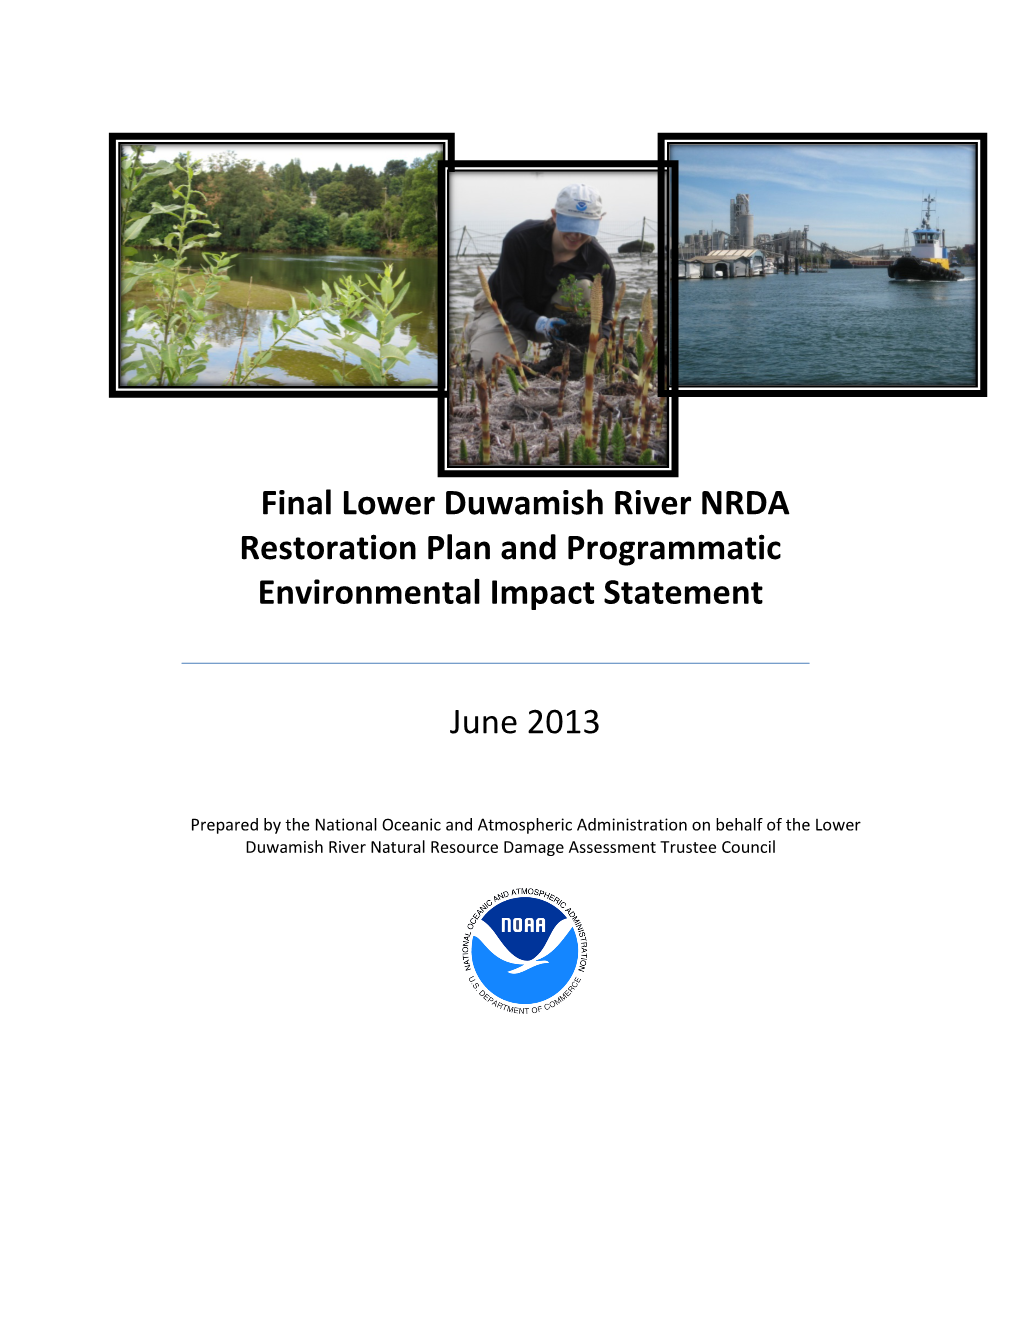 Final Lower Duwamish River NRDA Restoration Plan and Programmatic Environmental Impact Statement